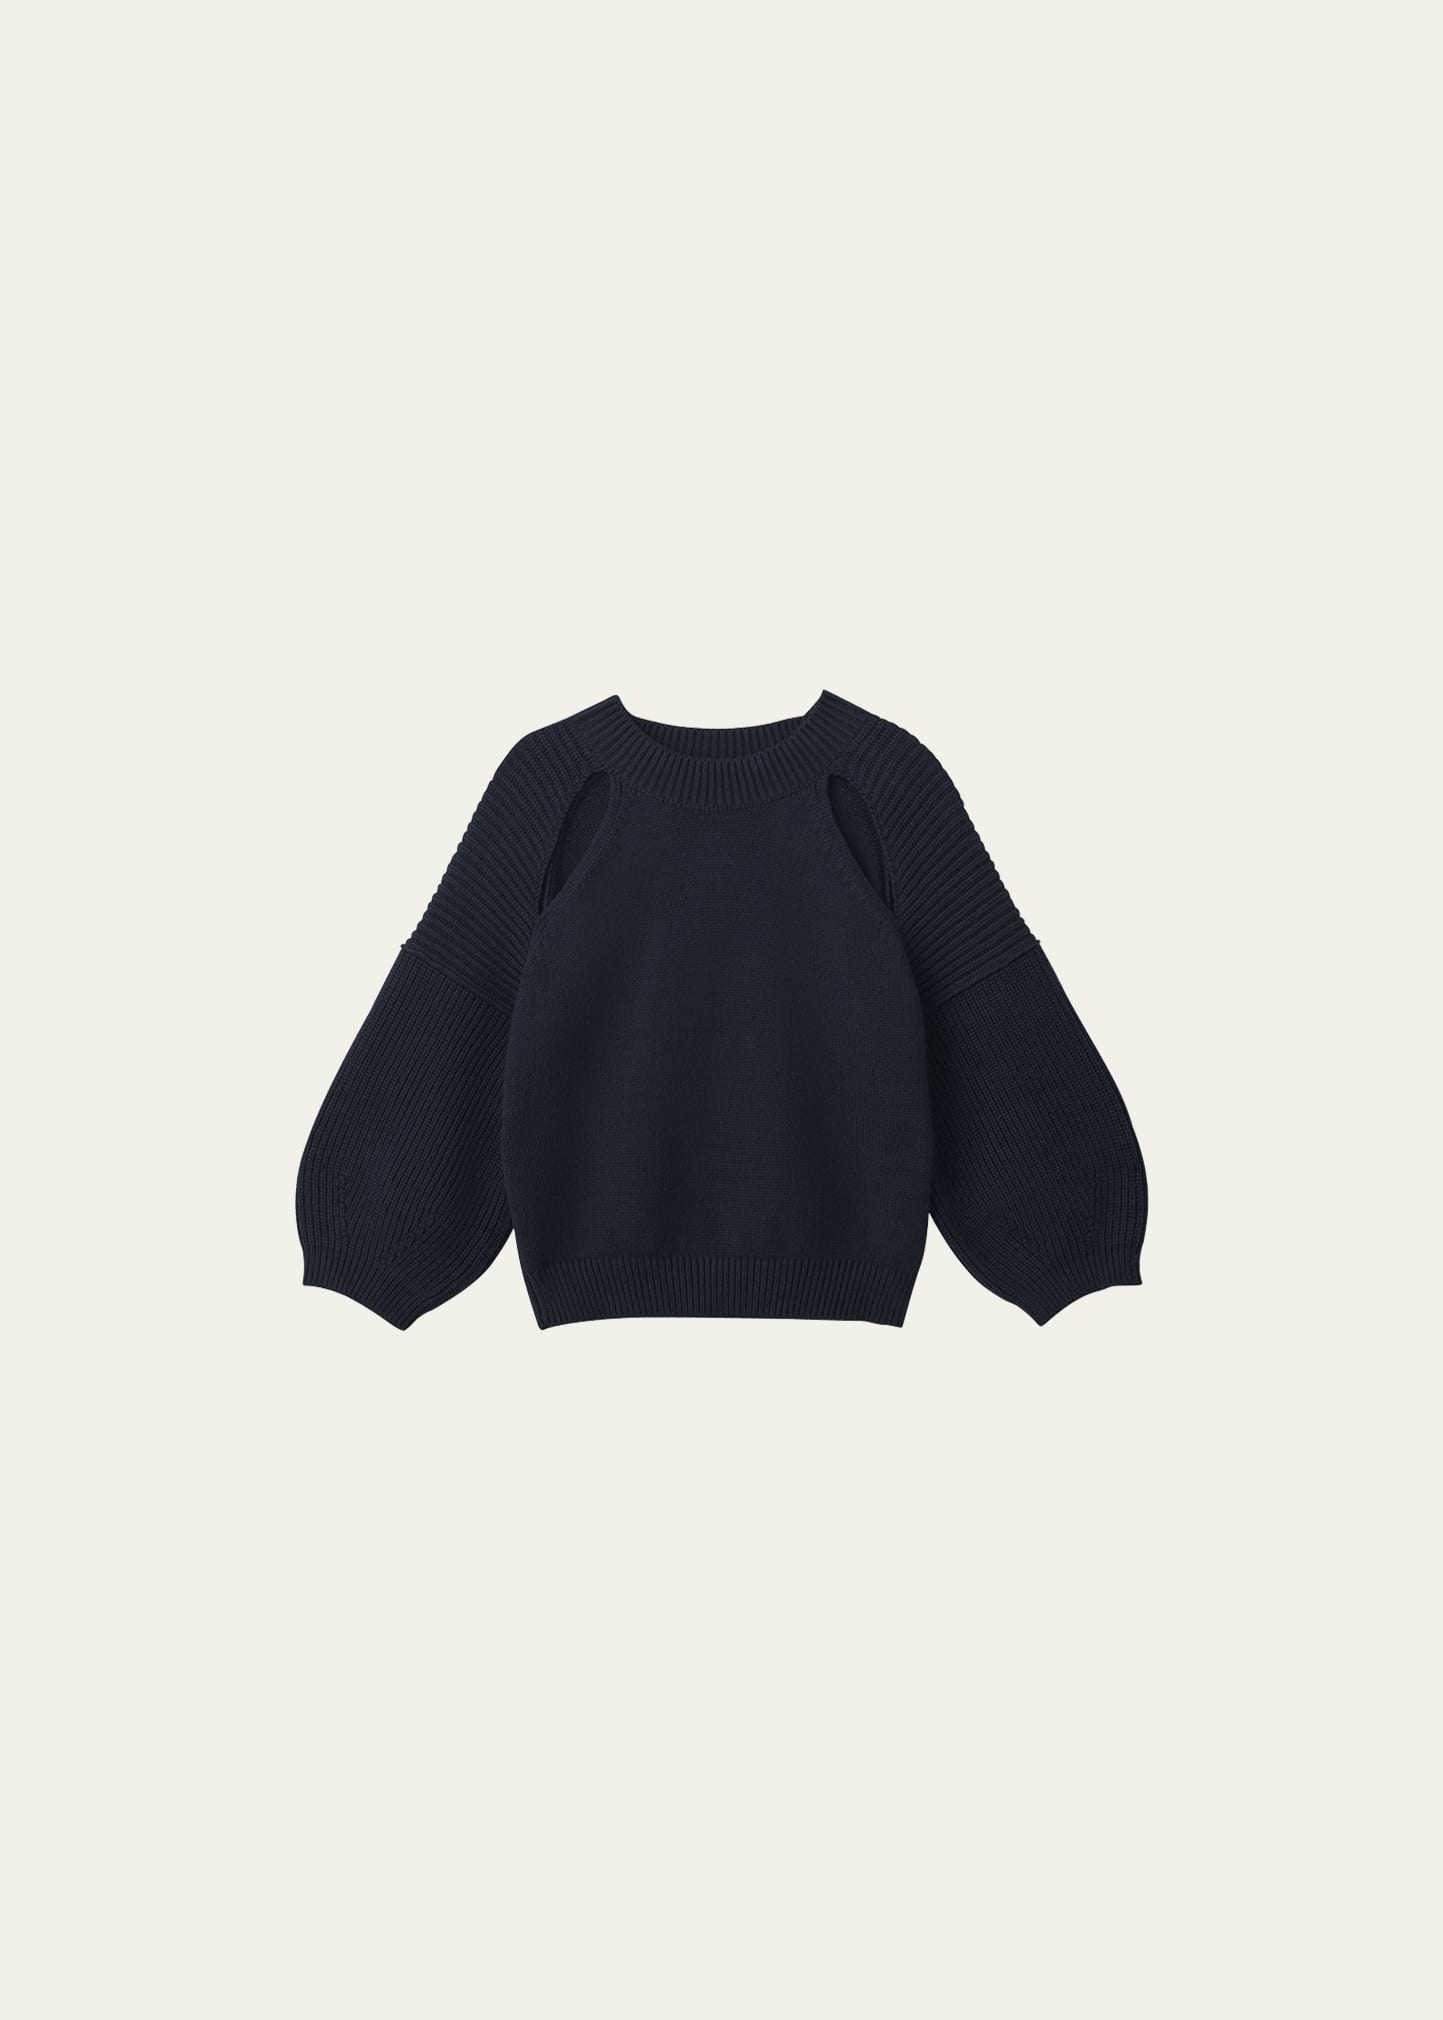 Kristen Colorblock Sweater